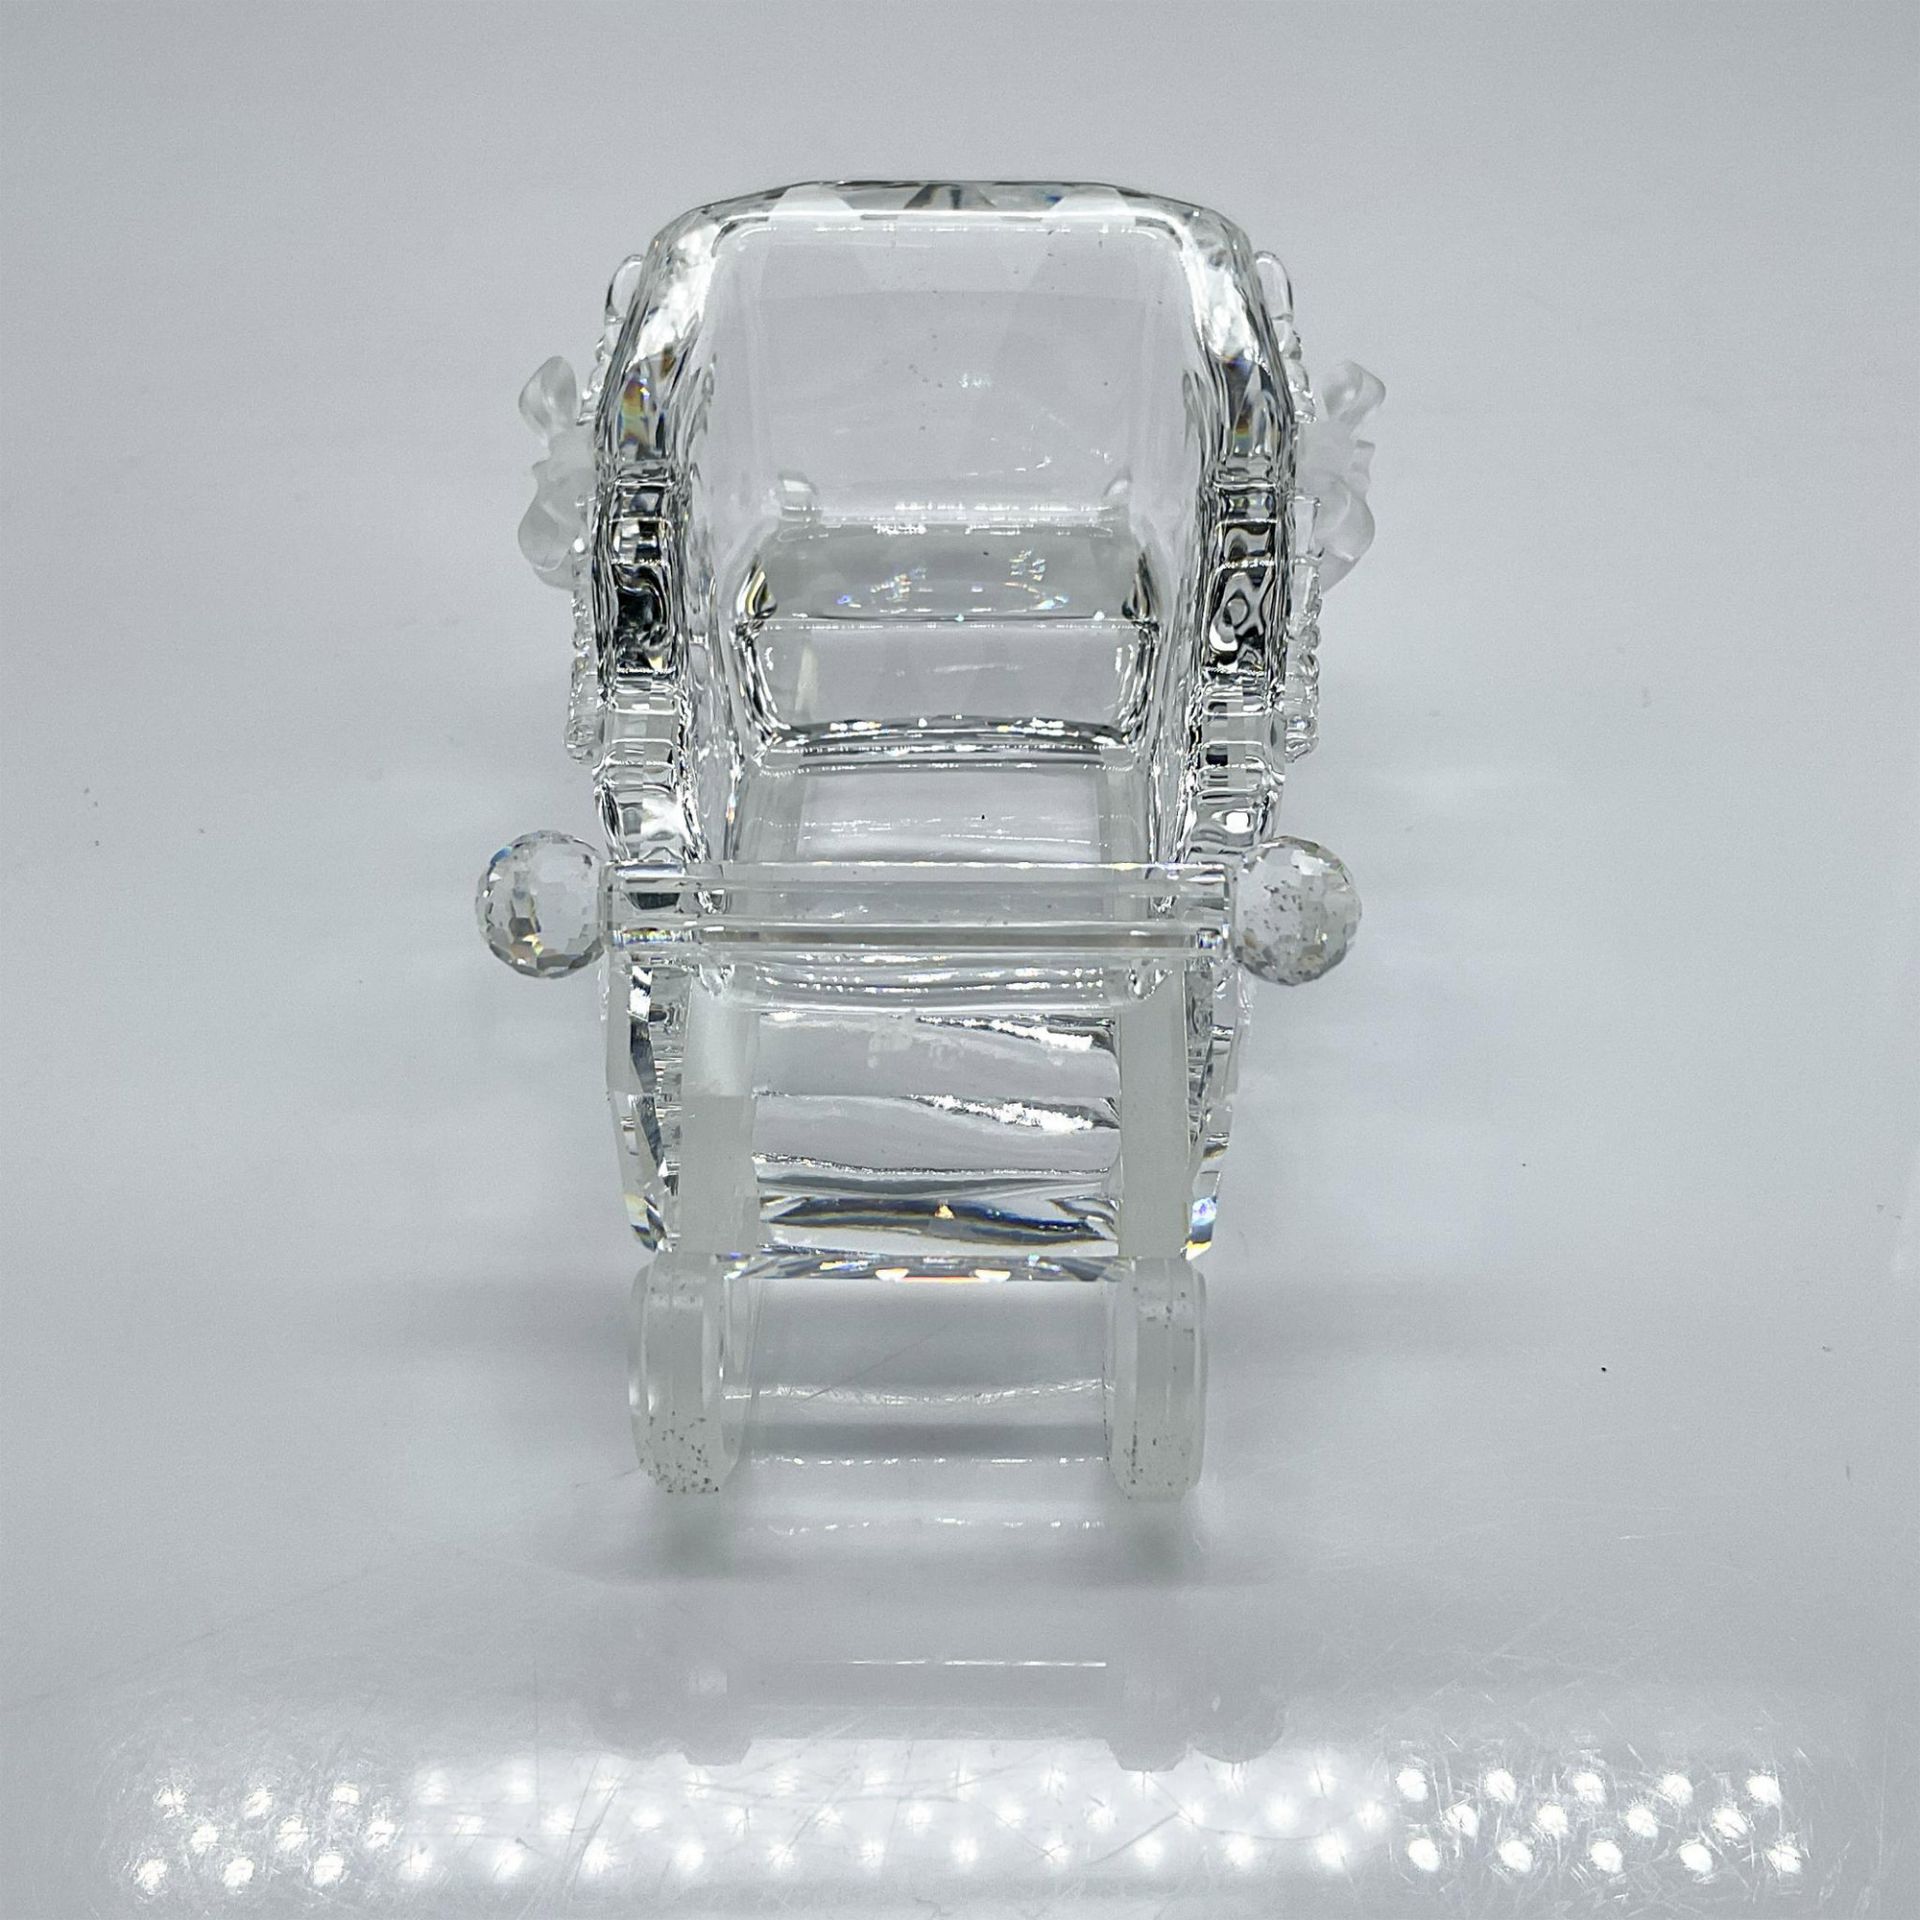 Swarovski Crystal Figurine, Santa's Christmas Sleigh - Image 5 of 6